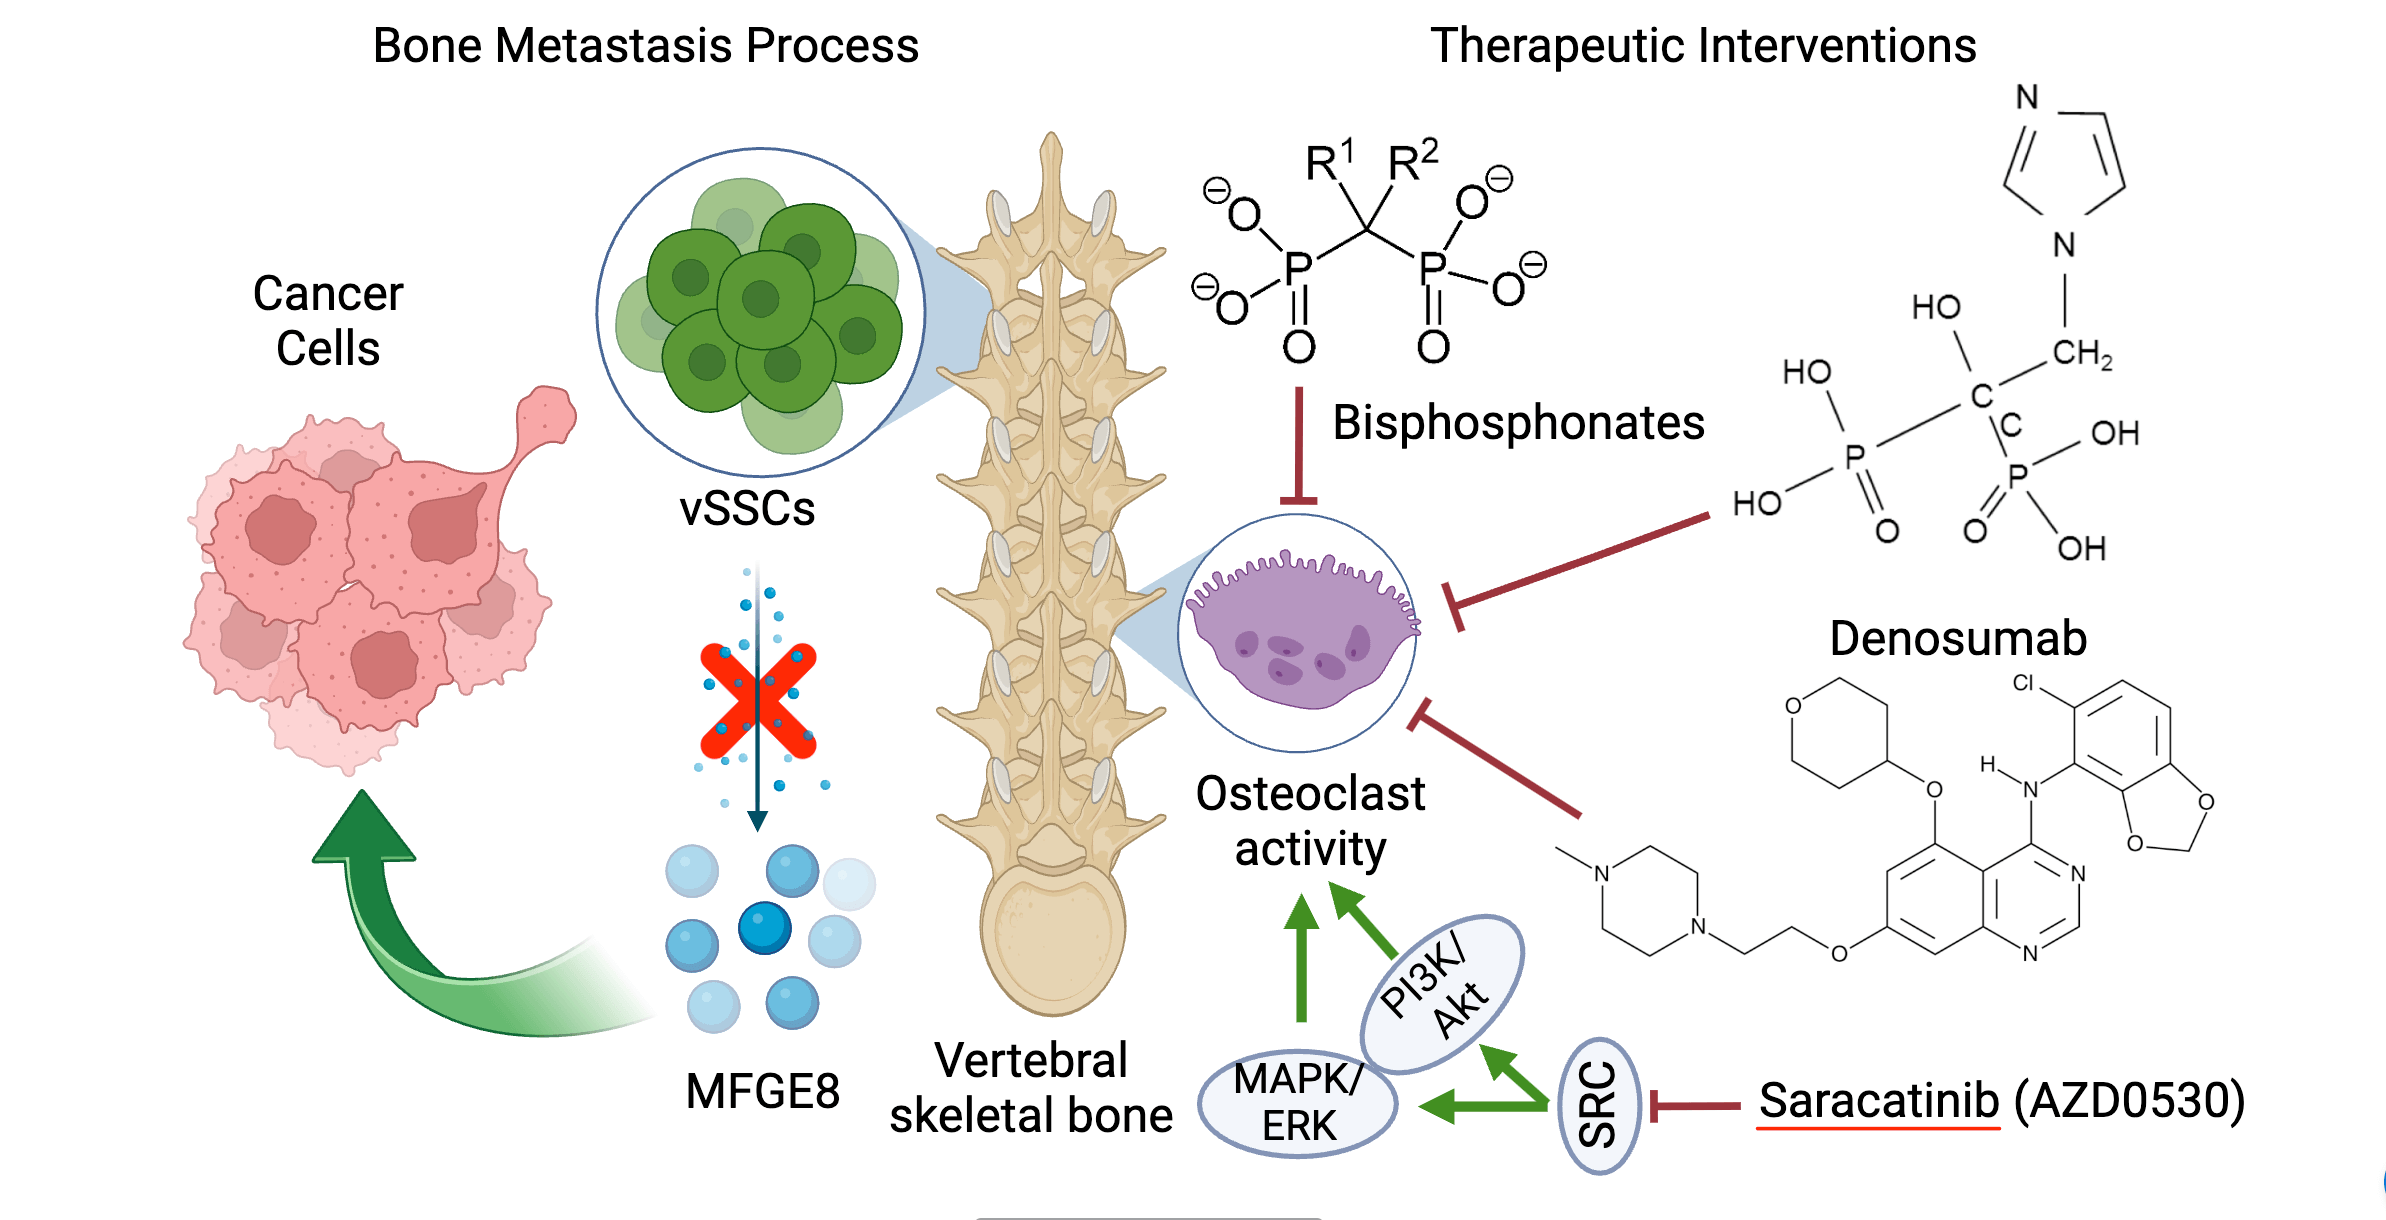 Game-changing insights on vertebral skeletal stem cells in bone metastasis and therapeutic horizons